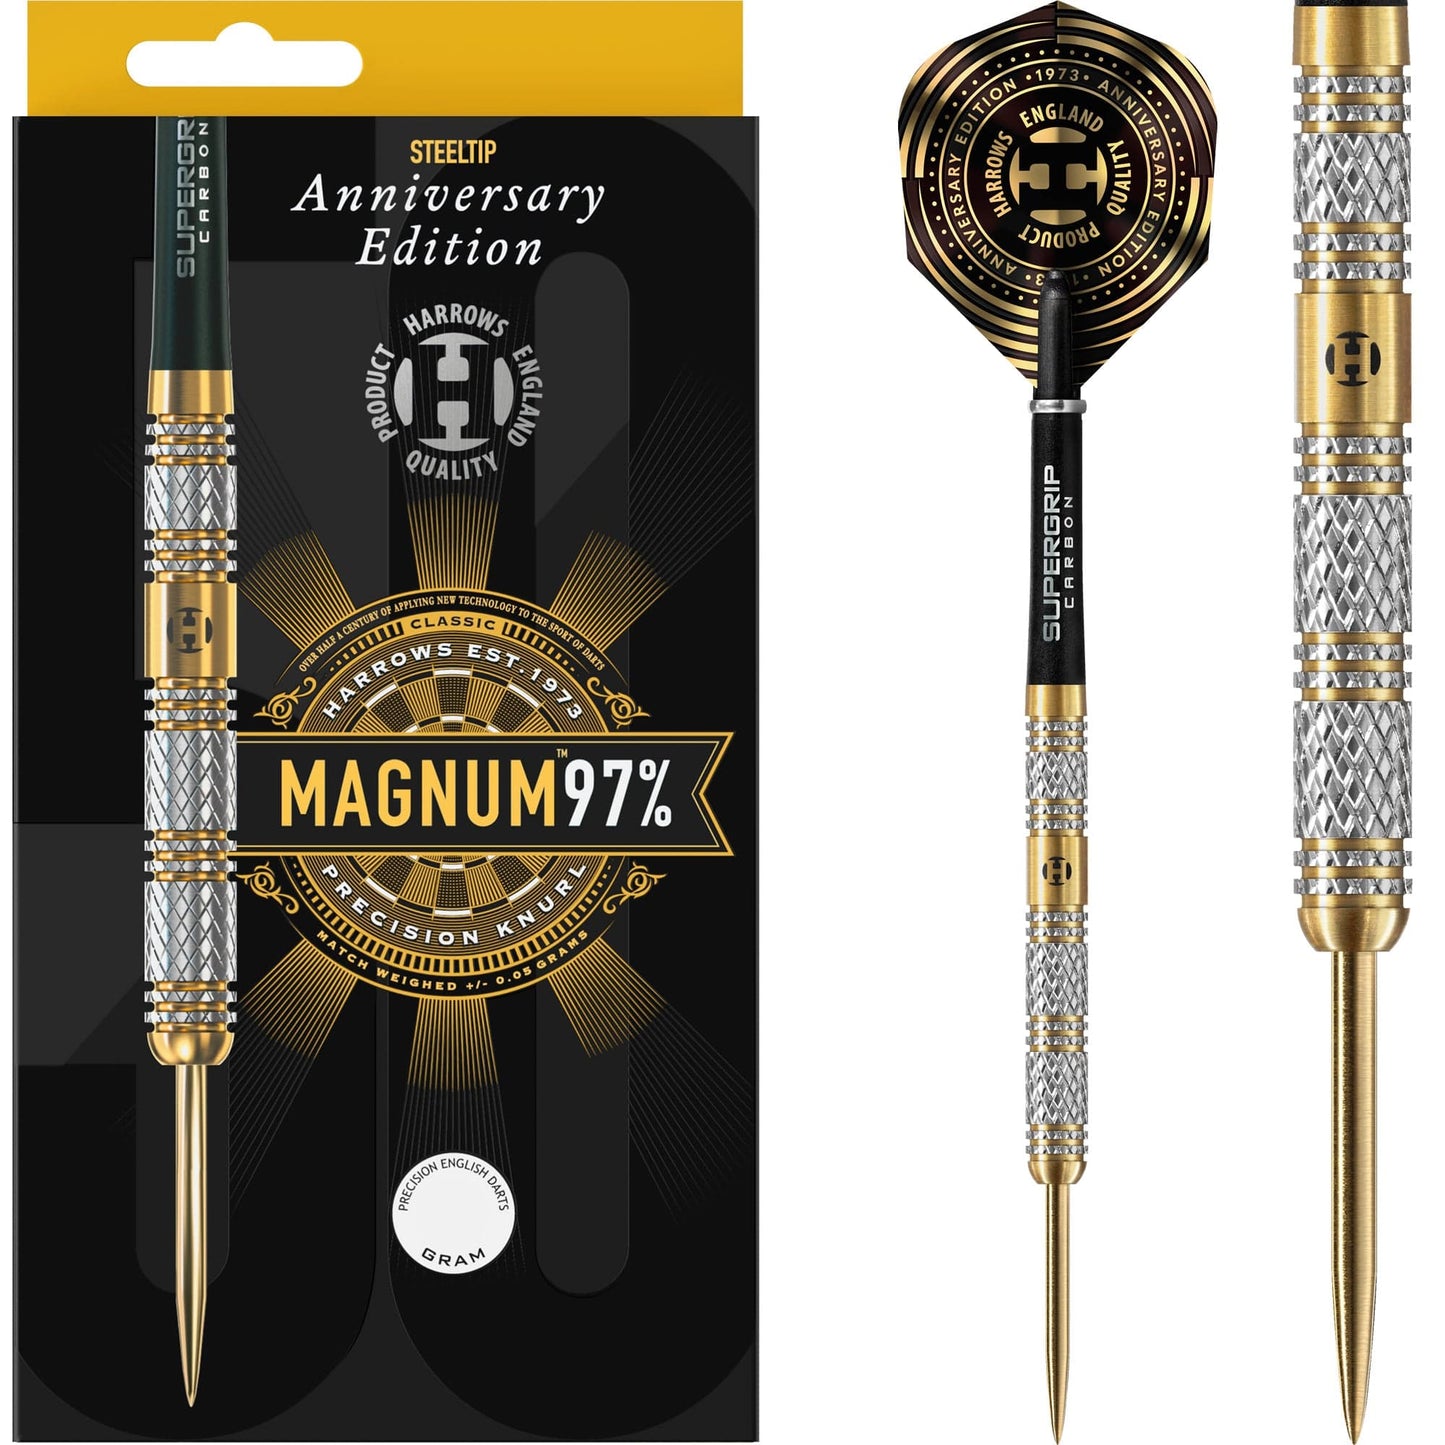 Harrows Magnum Darts - Steel Tip - 97% - Anniversary Edition - Gold Titanium 21g